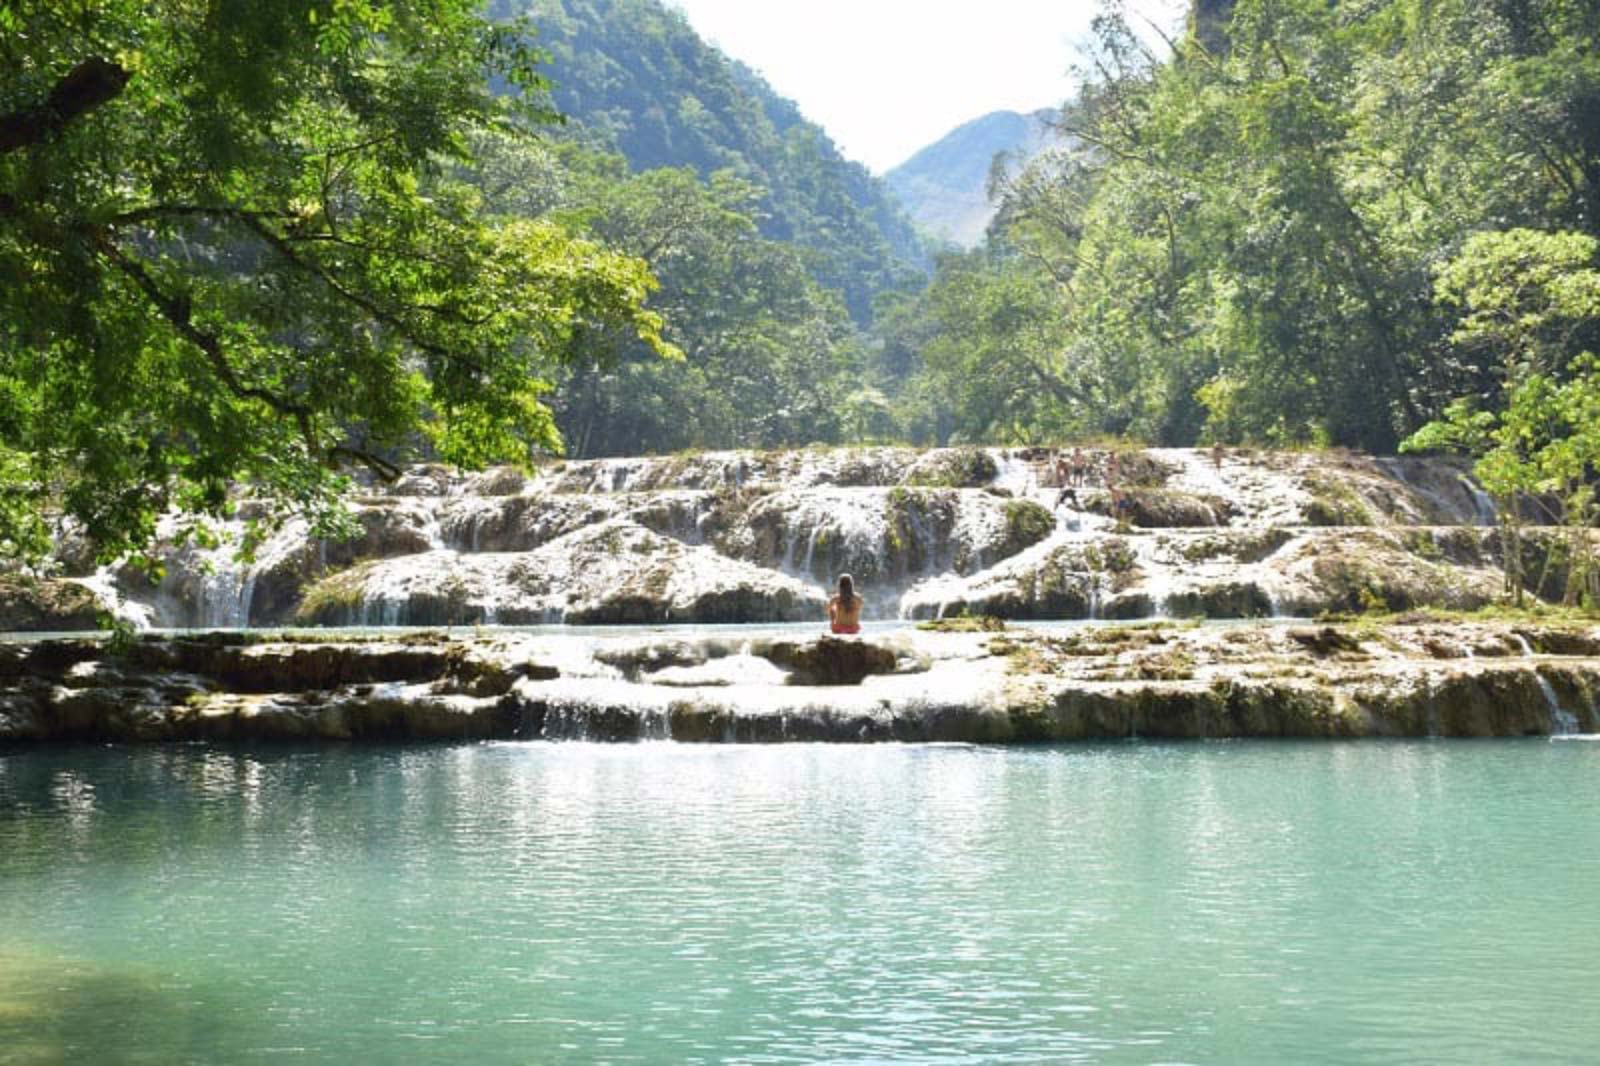 things to doi n guatemala waterfalls